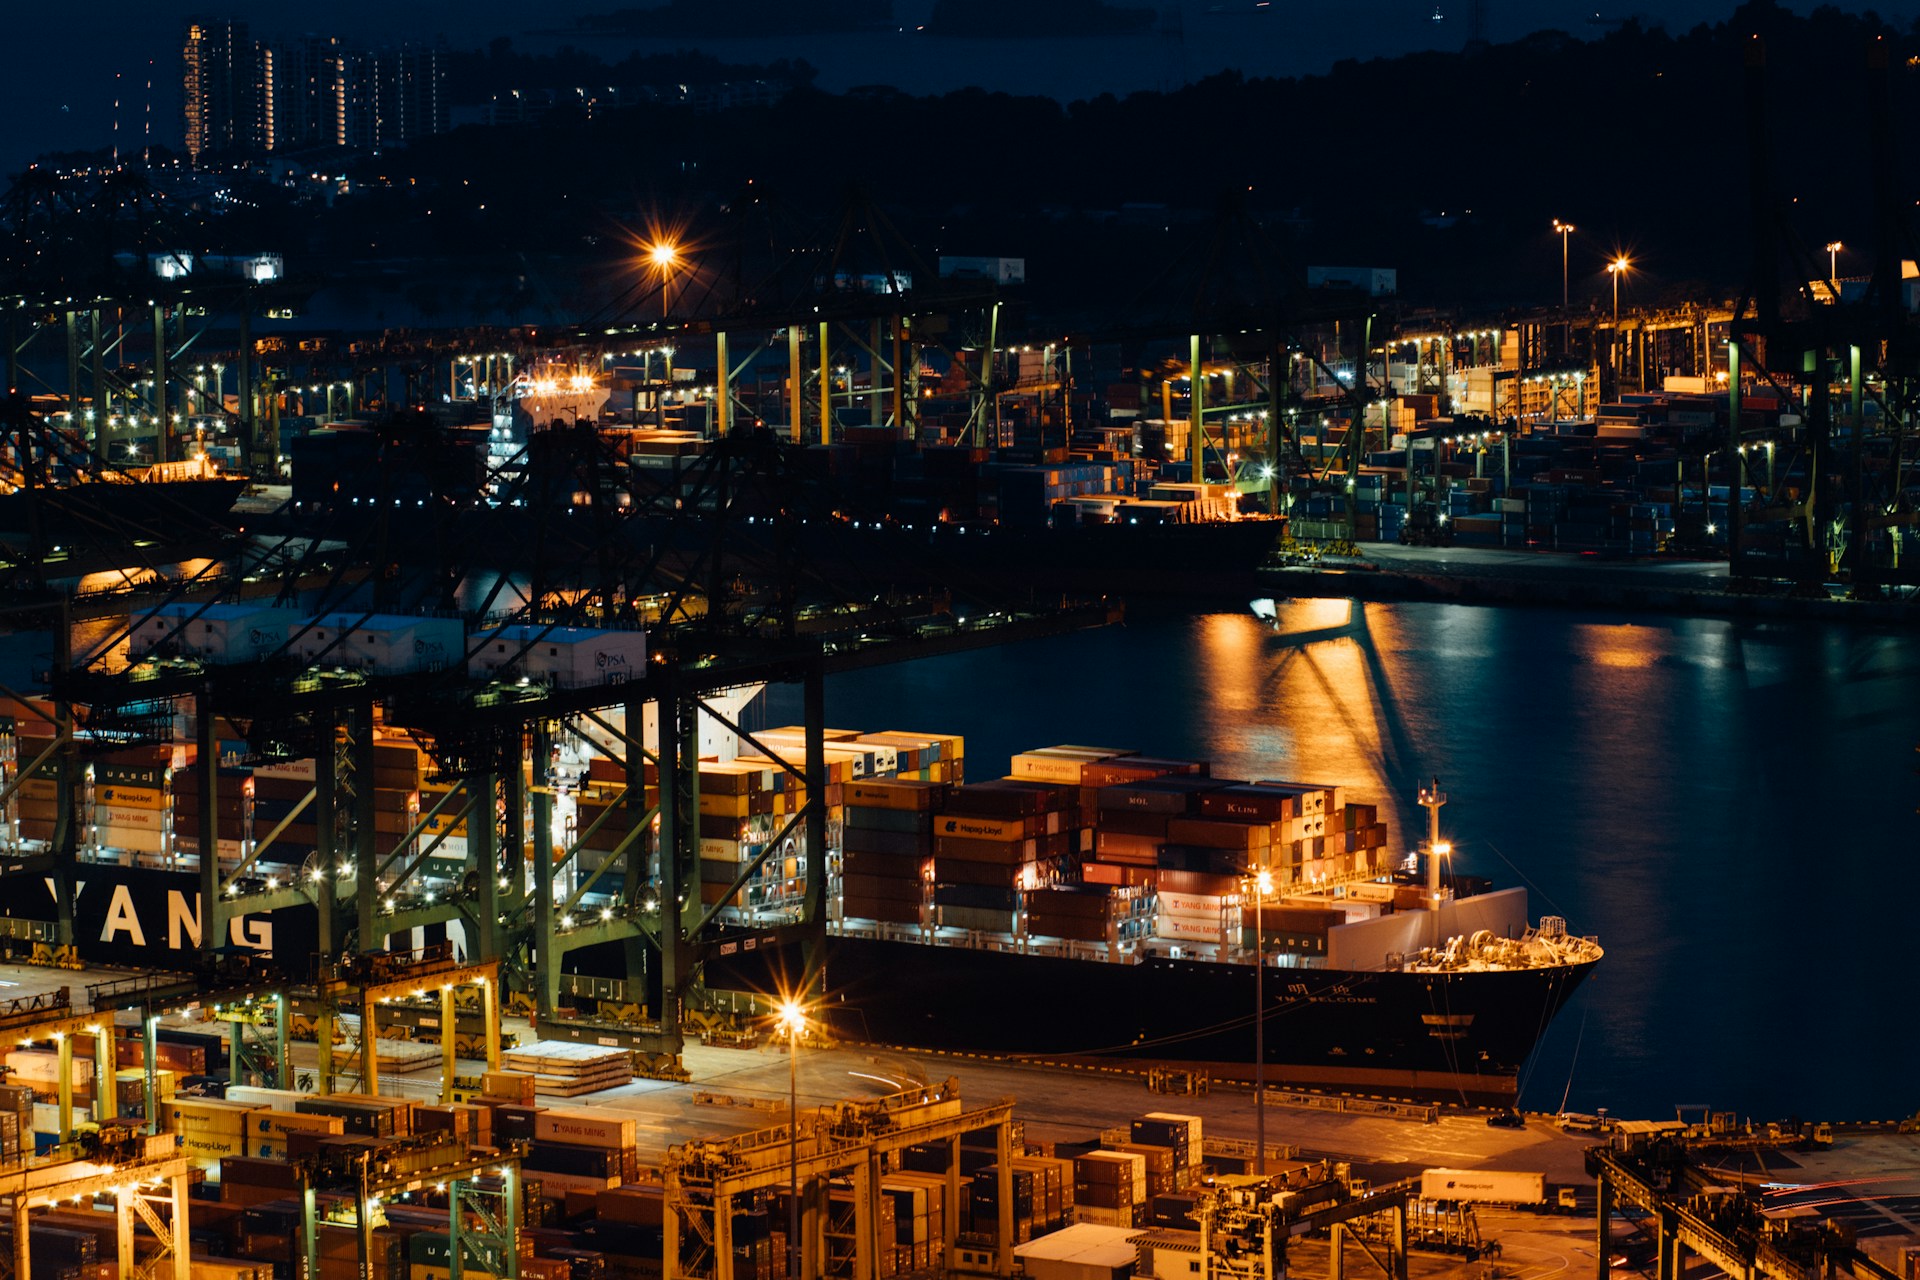 Singapore Port at night